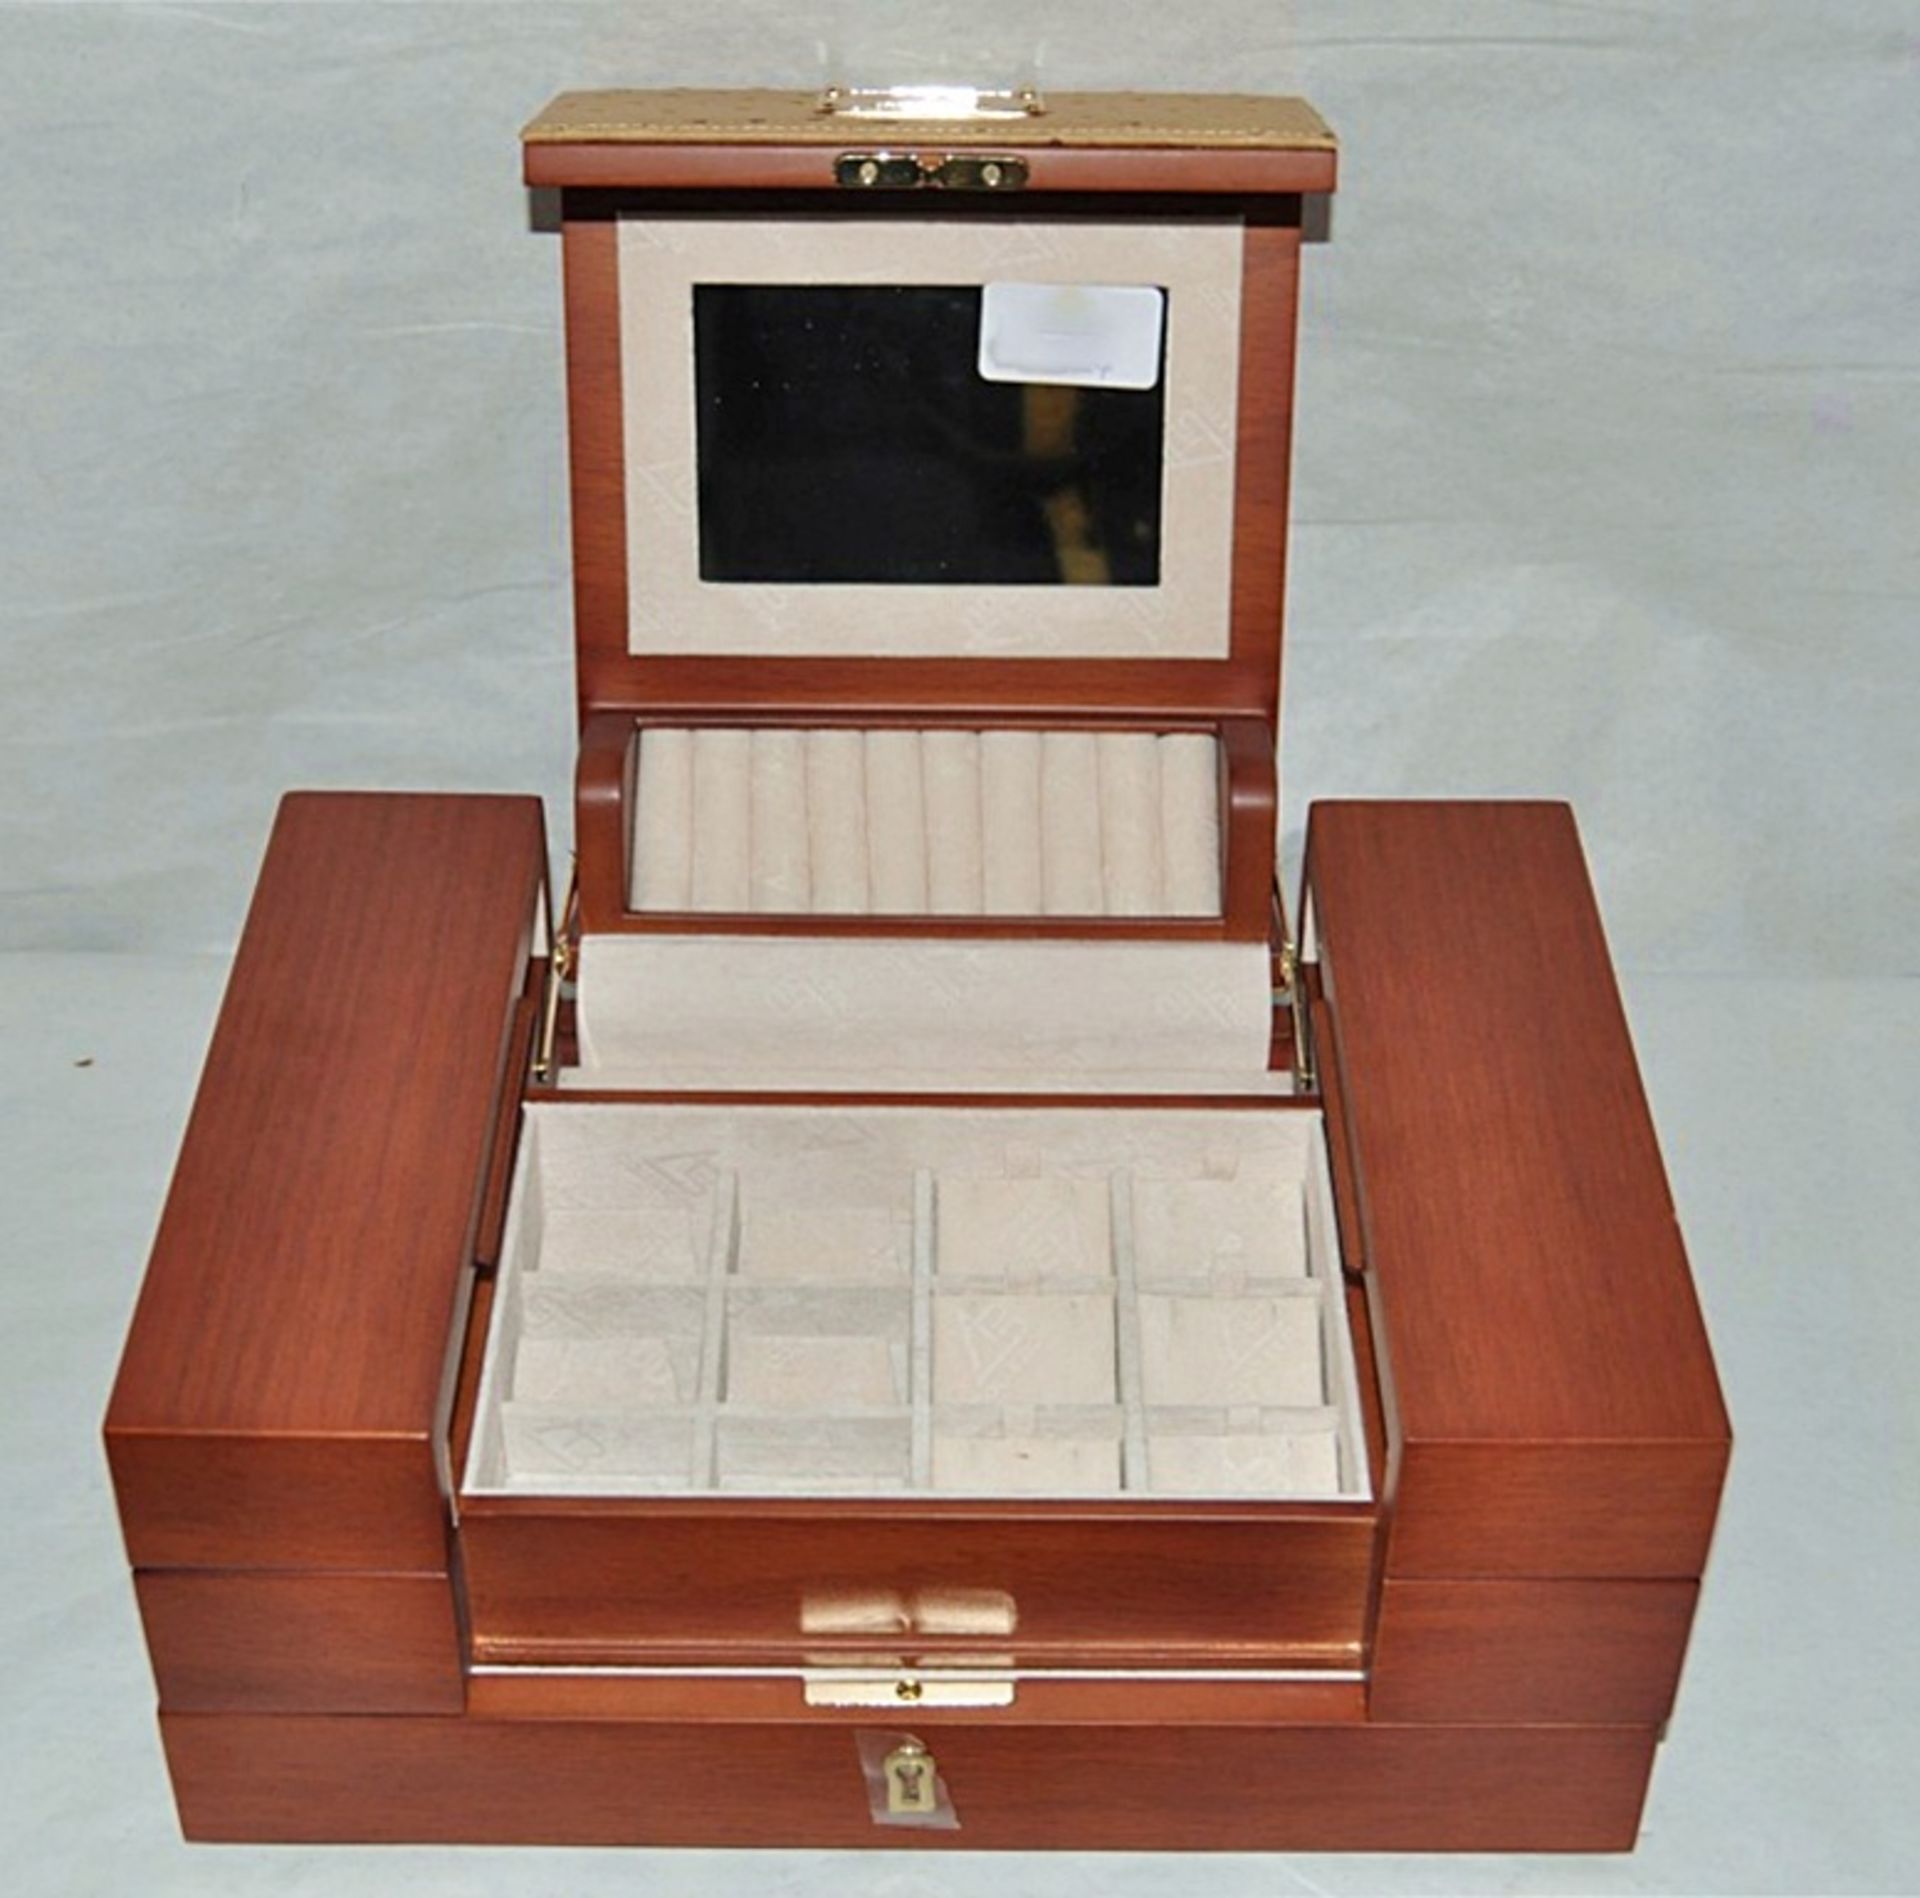 1 x "AB Collezioni" Italian Luxury Jewellery Box (WC112W) - Ref LT112  – Made From Cherry Wood -